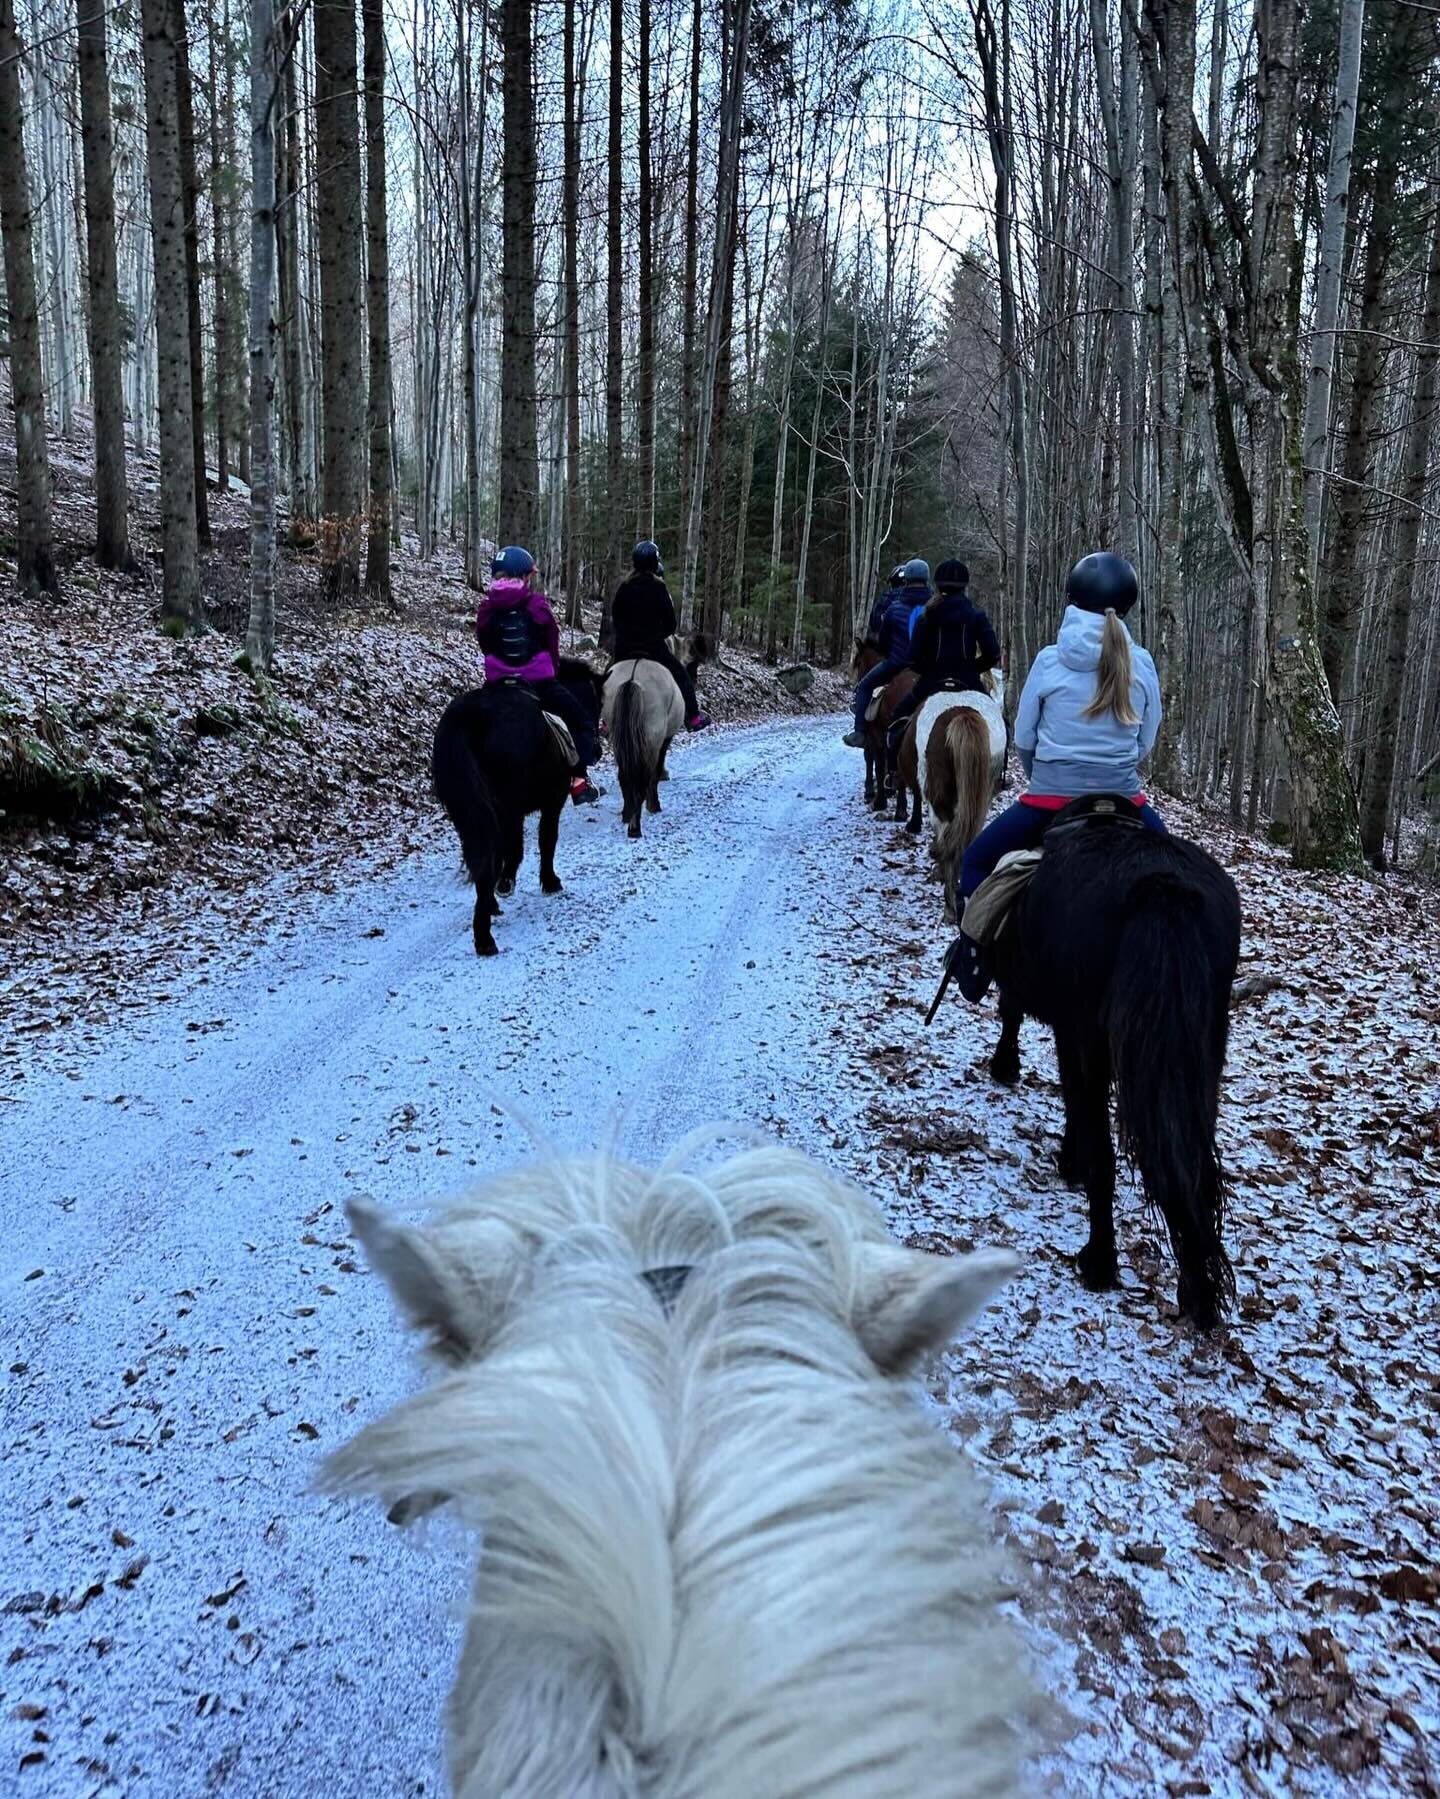 The view is always better from a horseback 🥰

#icelandichorse #icelandichorses #icelandichorsesofinstagram #islandpferd #islandpferde #horsebackriding #horsebackrider #transylvania #harghita #harghitacounty